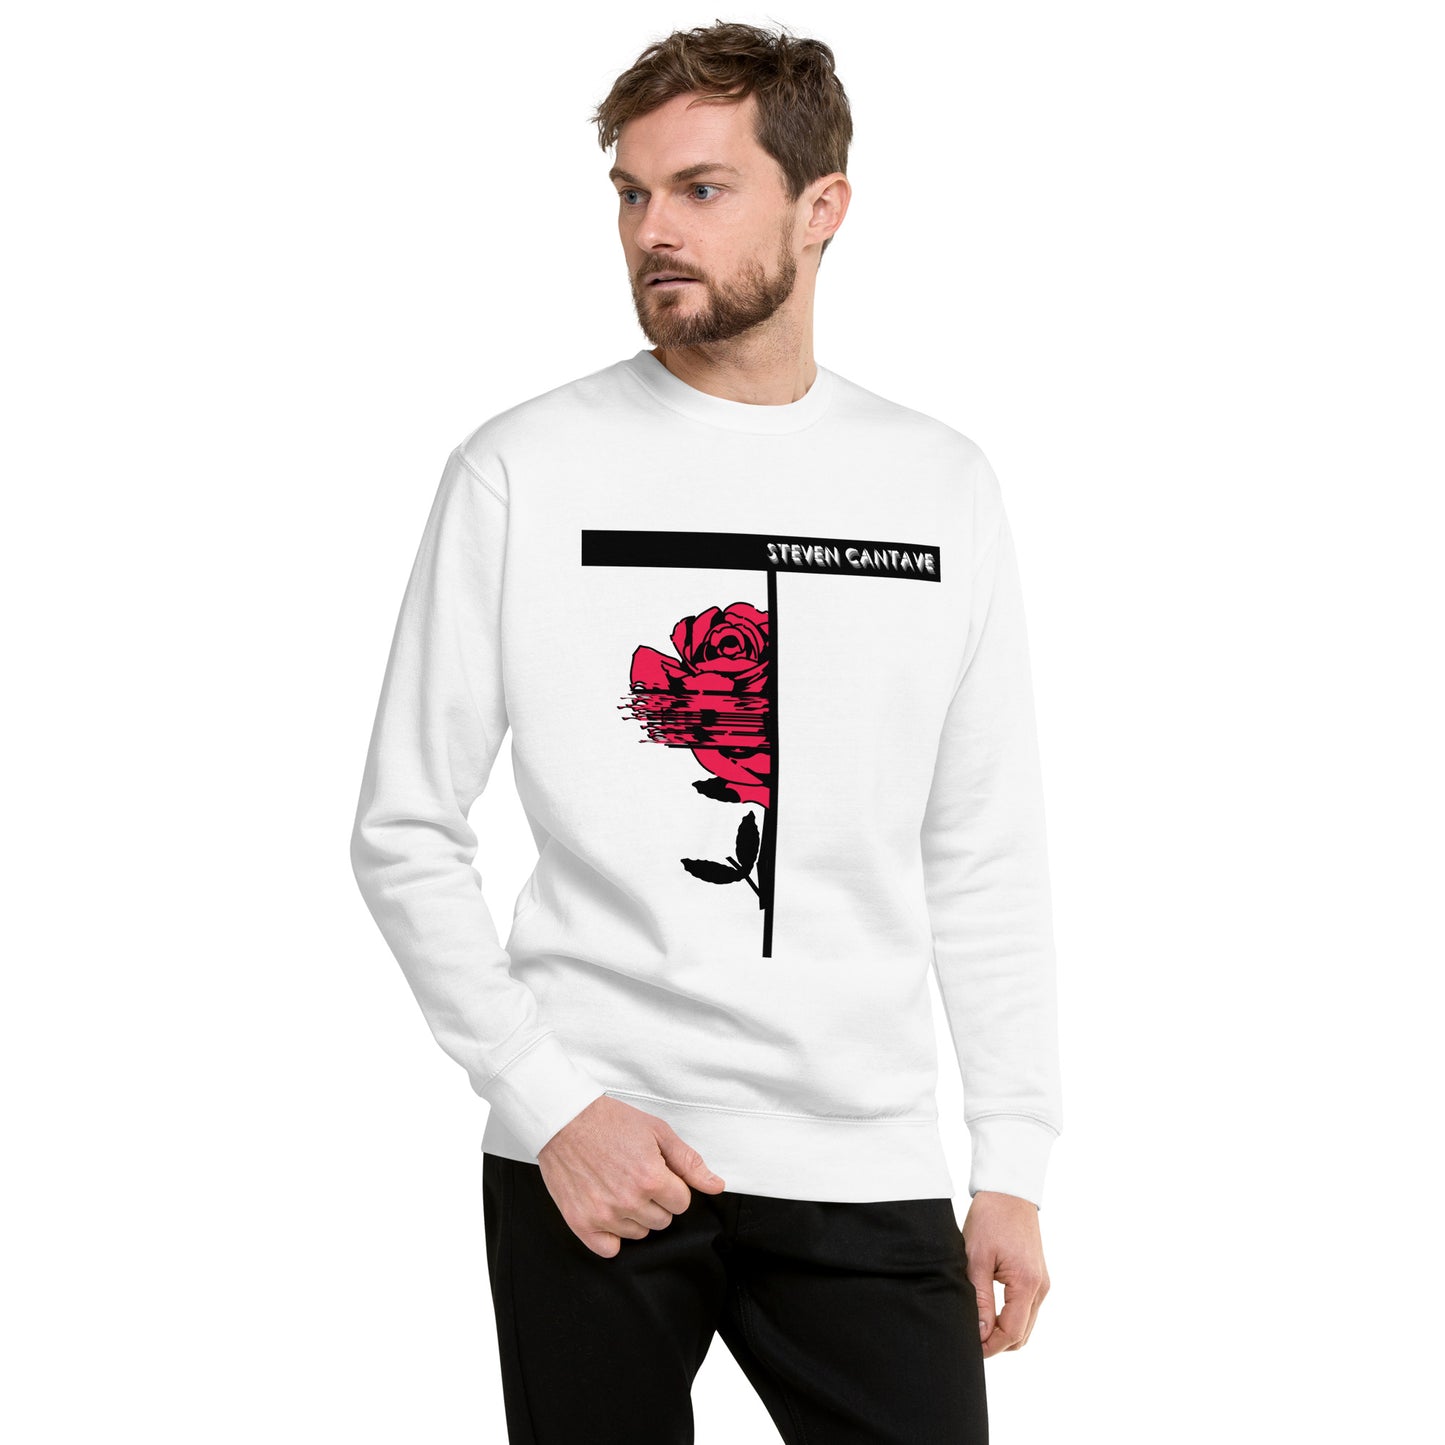 Sweatshirt With Half Rose